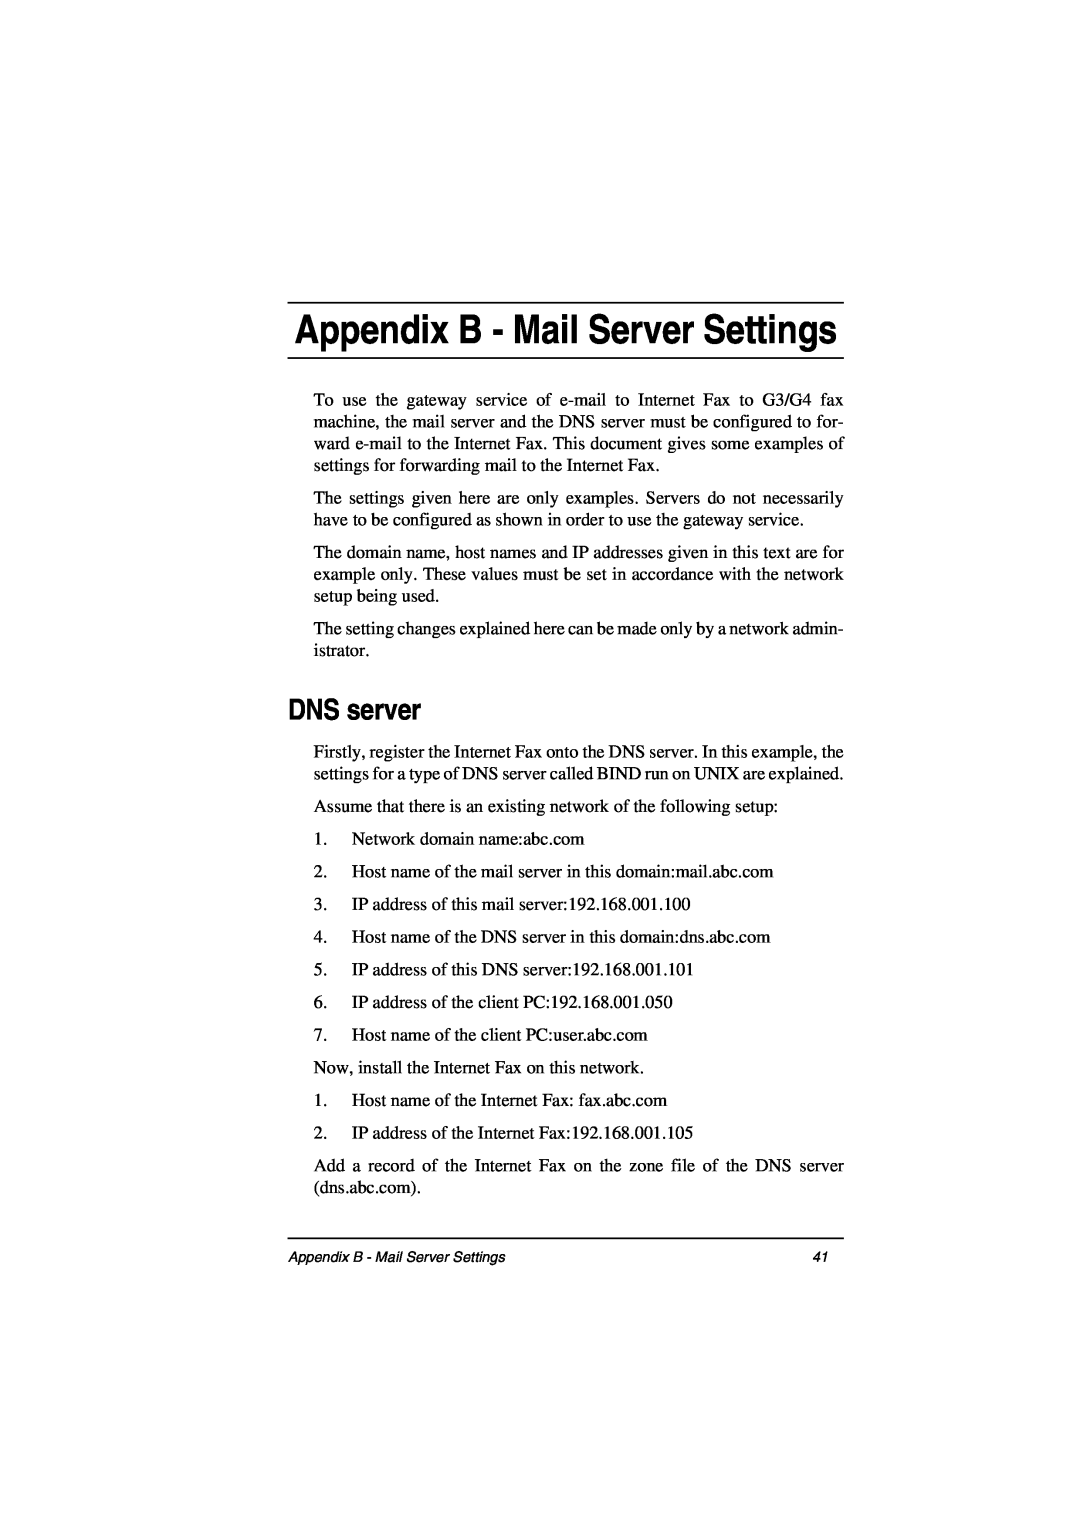 Oki ii manual DNS server, Appendix B - Mail Server Settings 